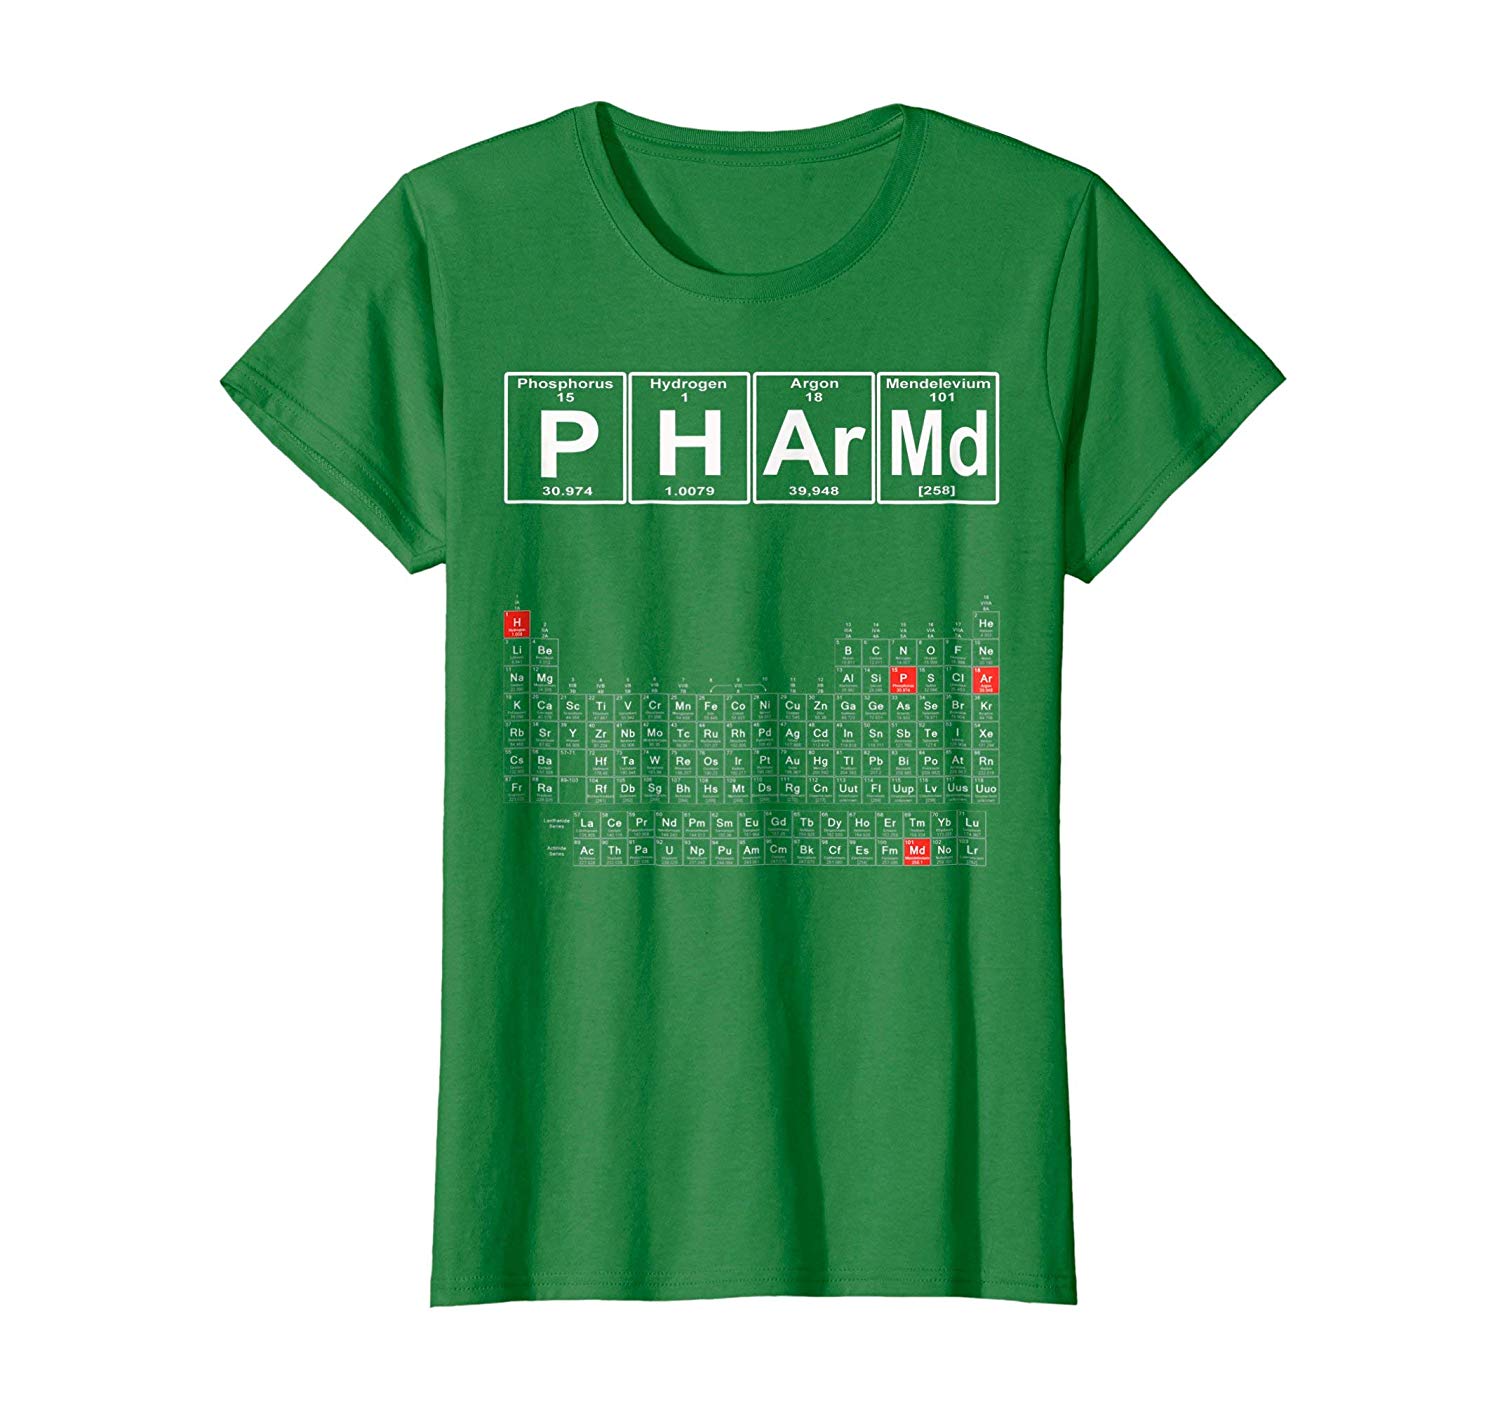 PharmD Logo - Amazon.com: PharmD T-shirt - Pharmacy Graduate - Pharmacy School ...